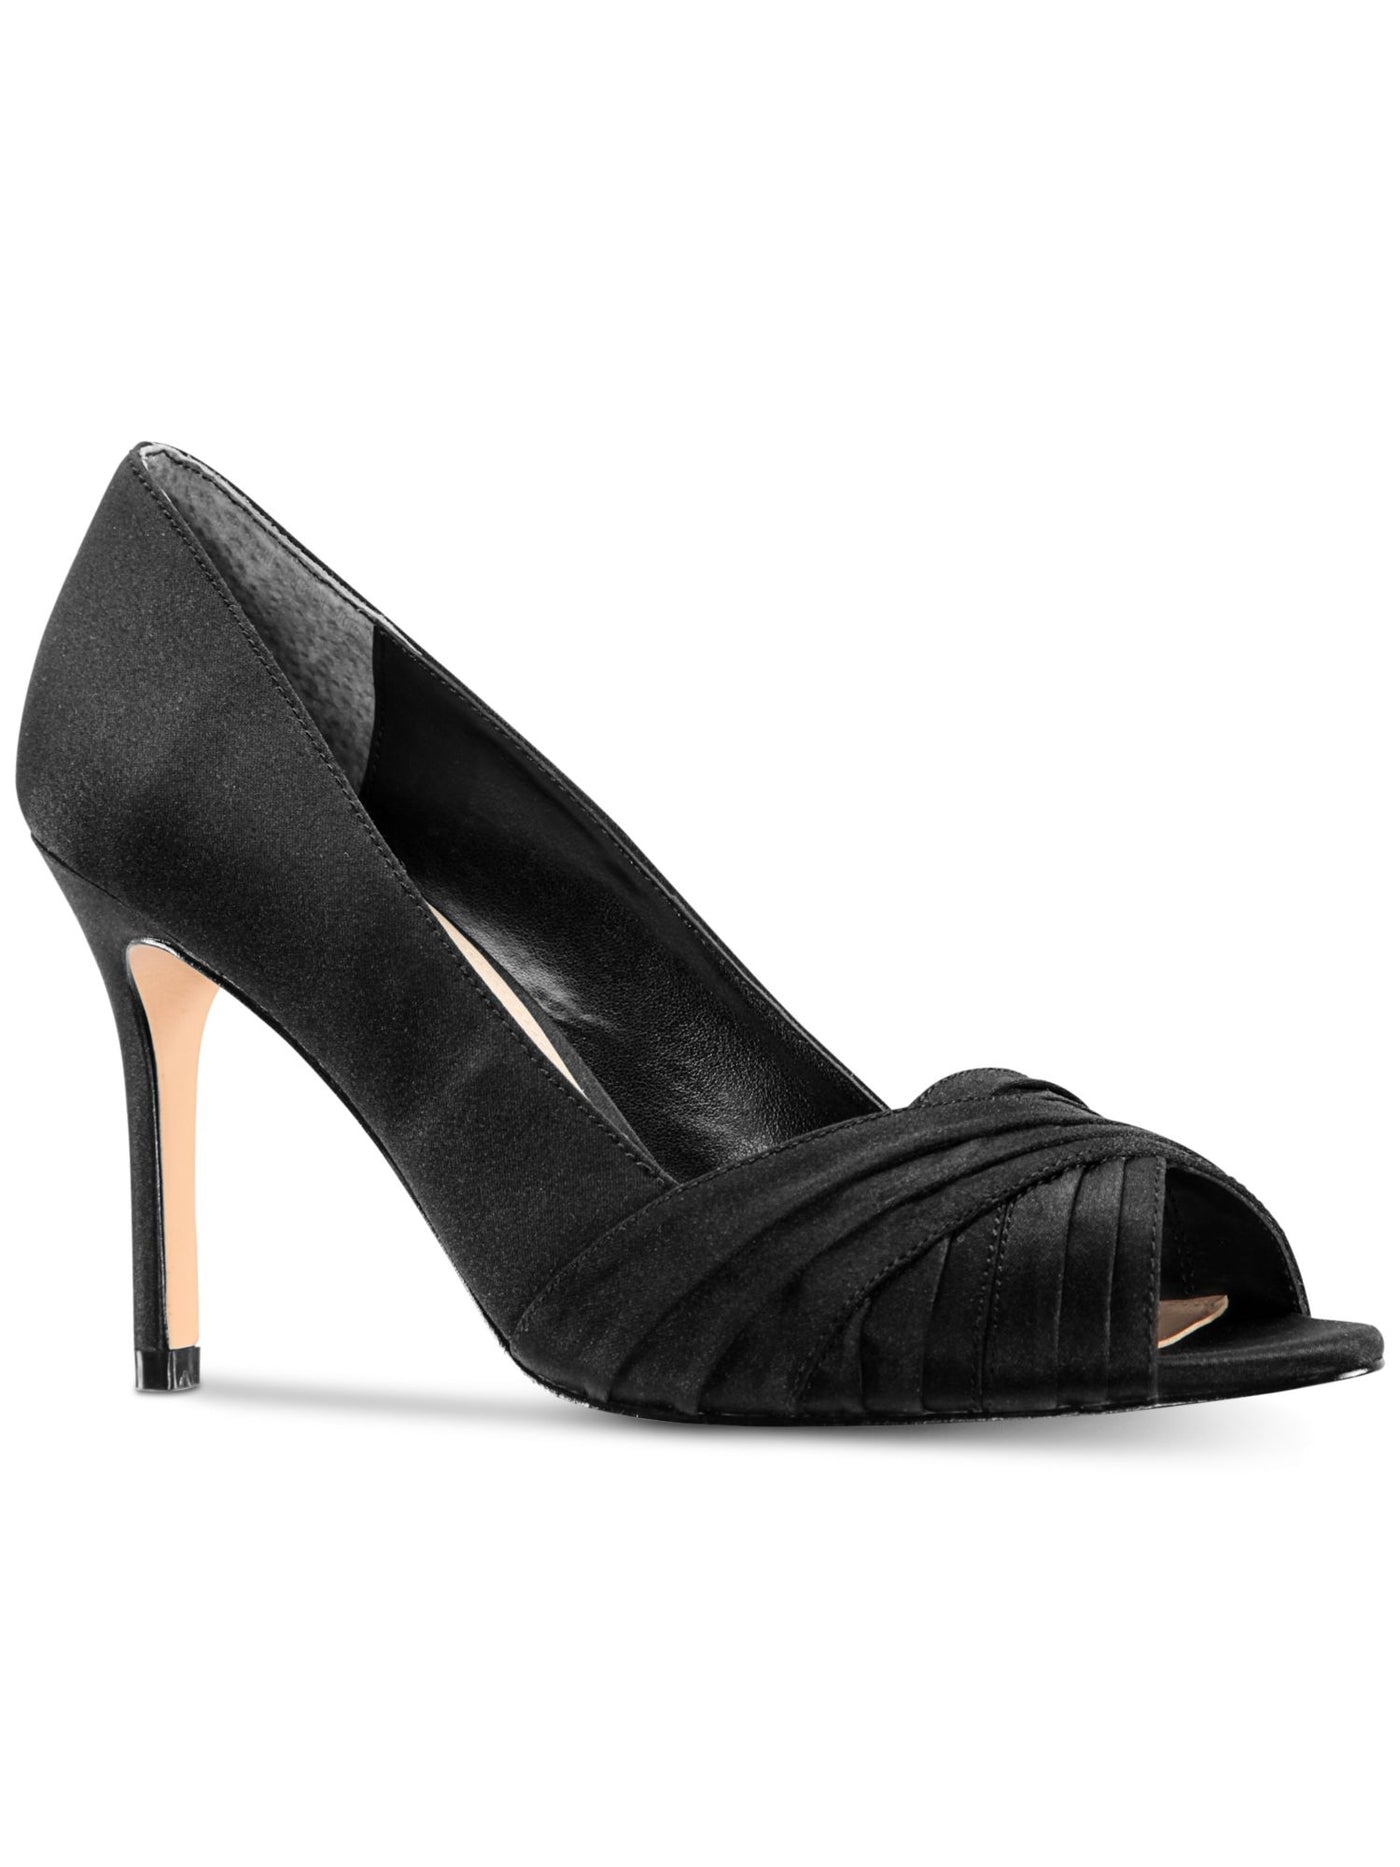 NINA Womens Black Satin Peep Toe Stiletto Slip On Dress Pumps Shoes 5.5 W